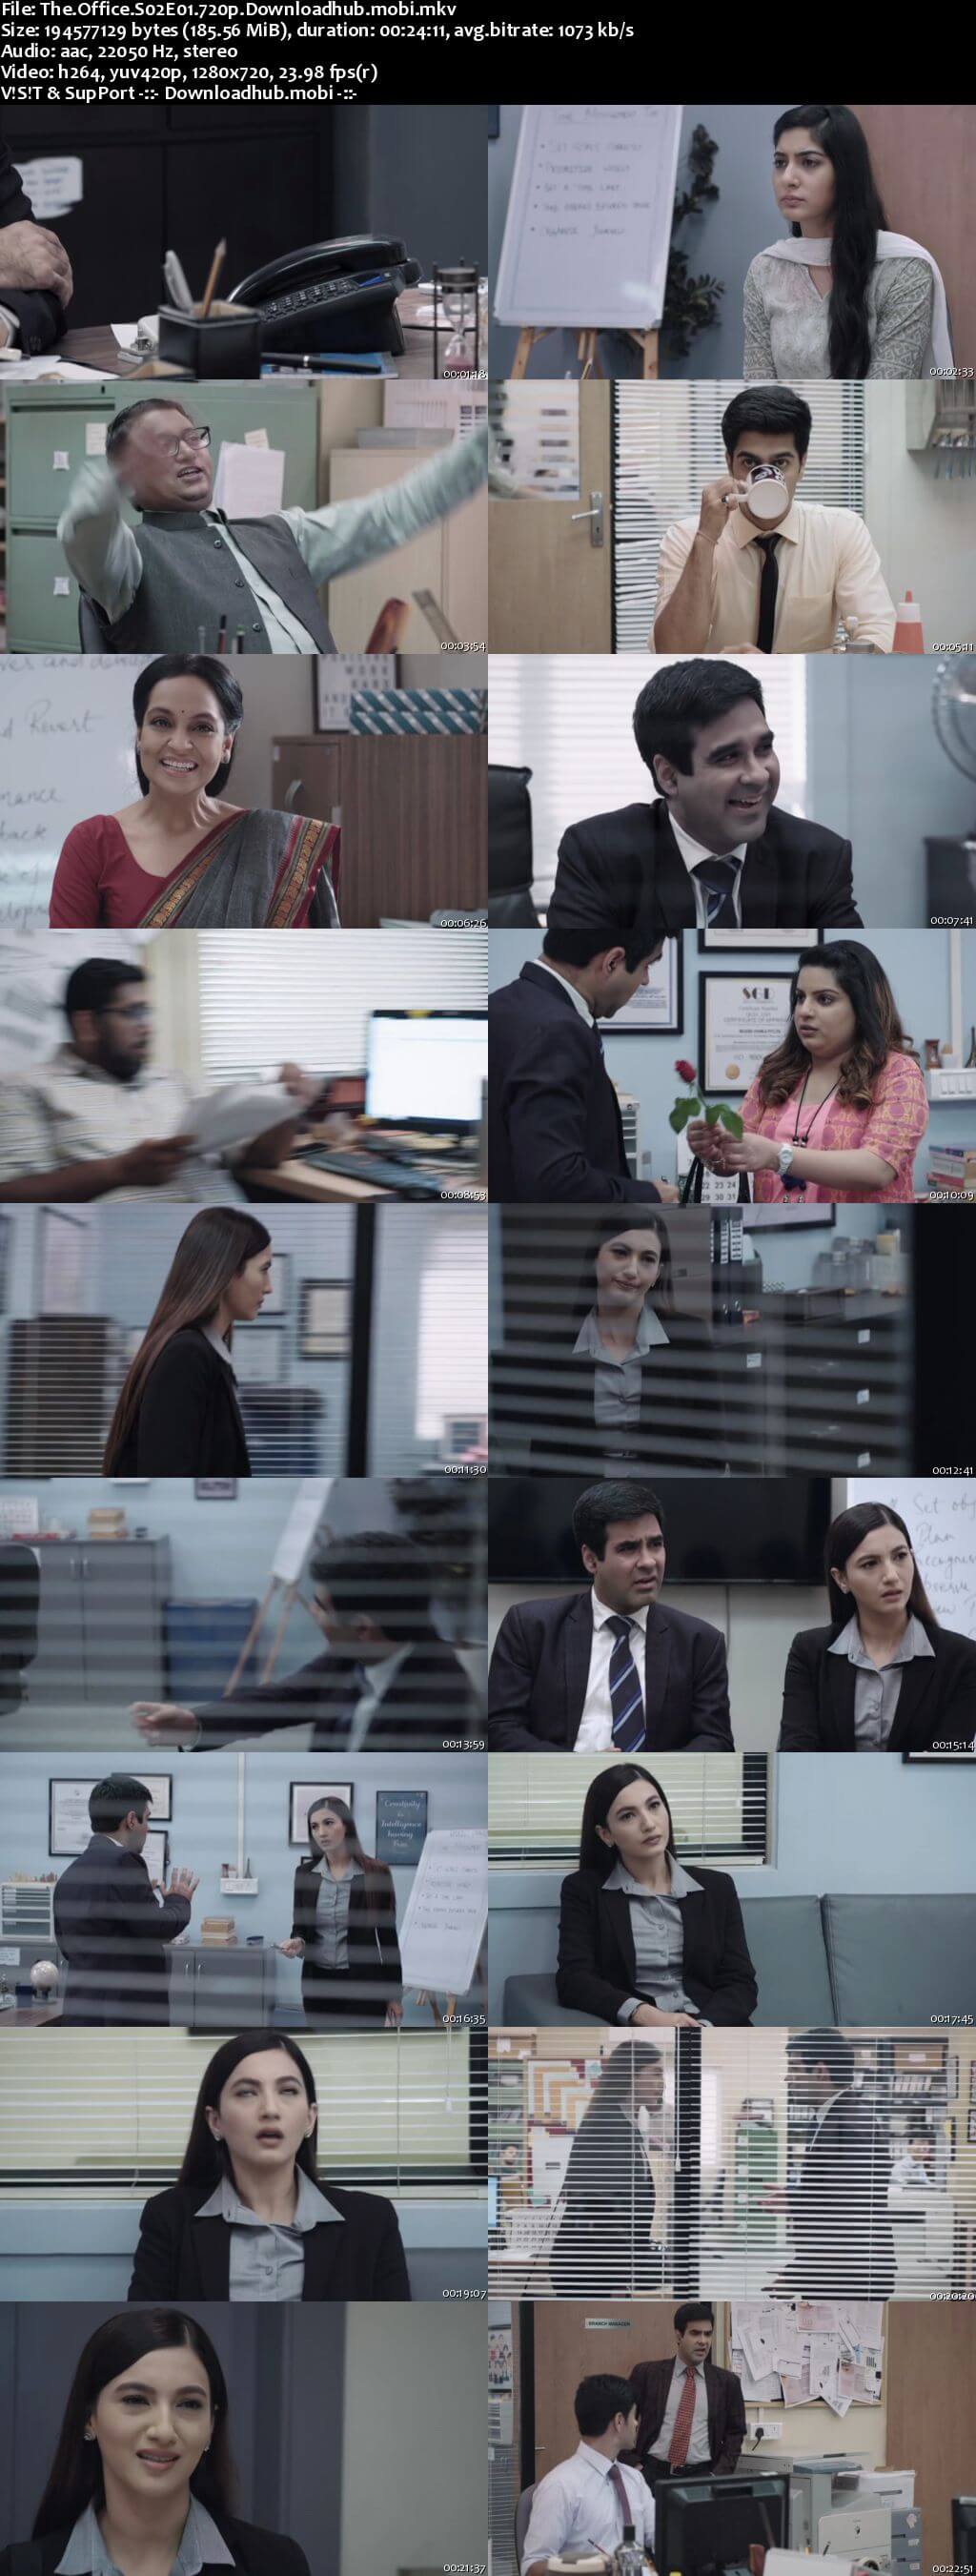 The Office 2019 Hindi Season 02 Complete 720p HDRip x264